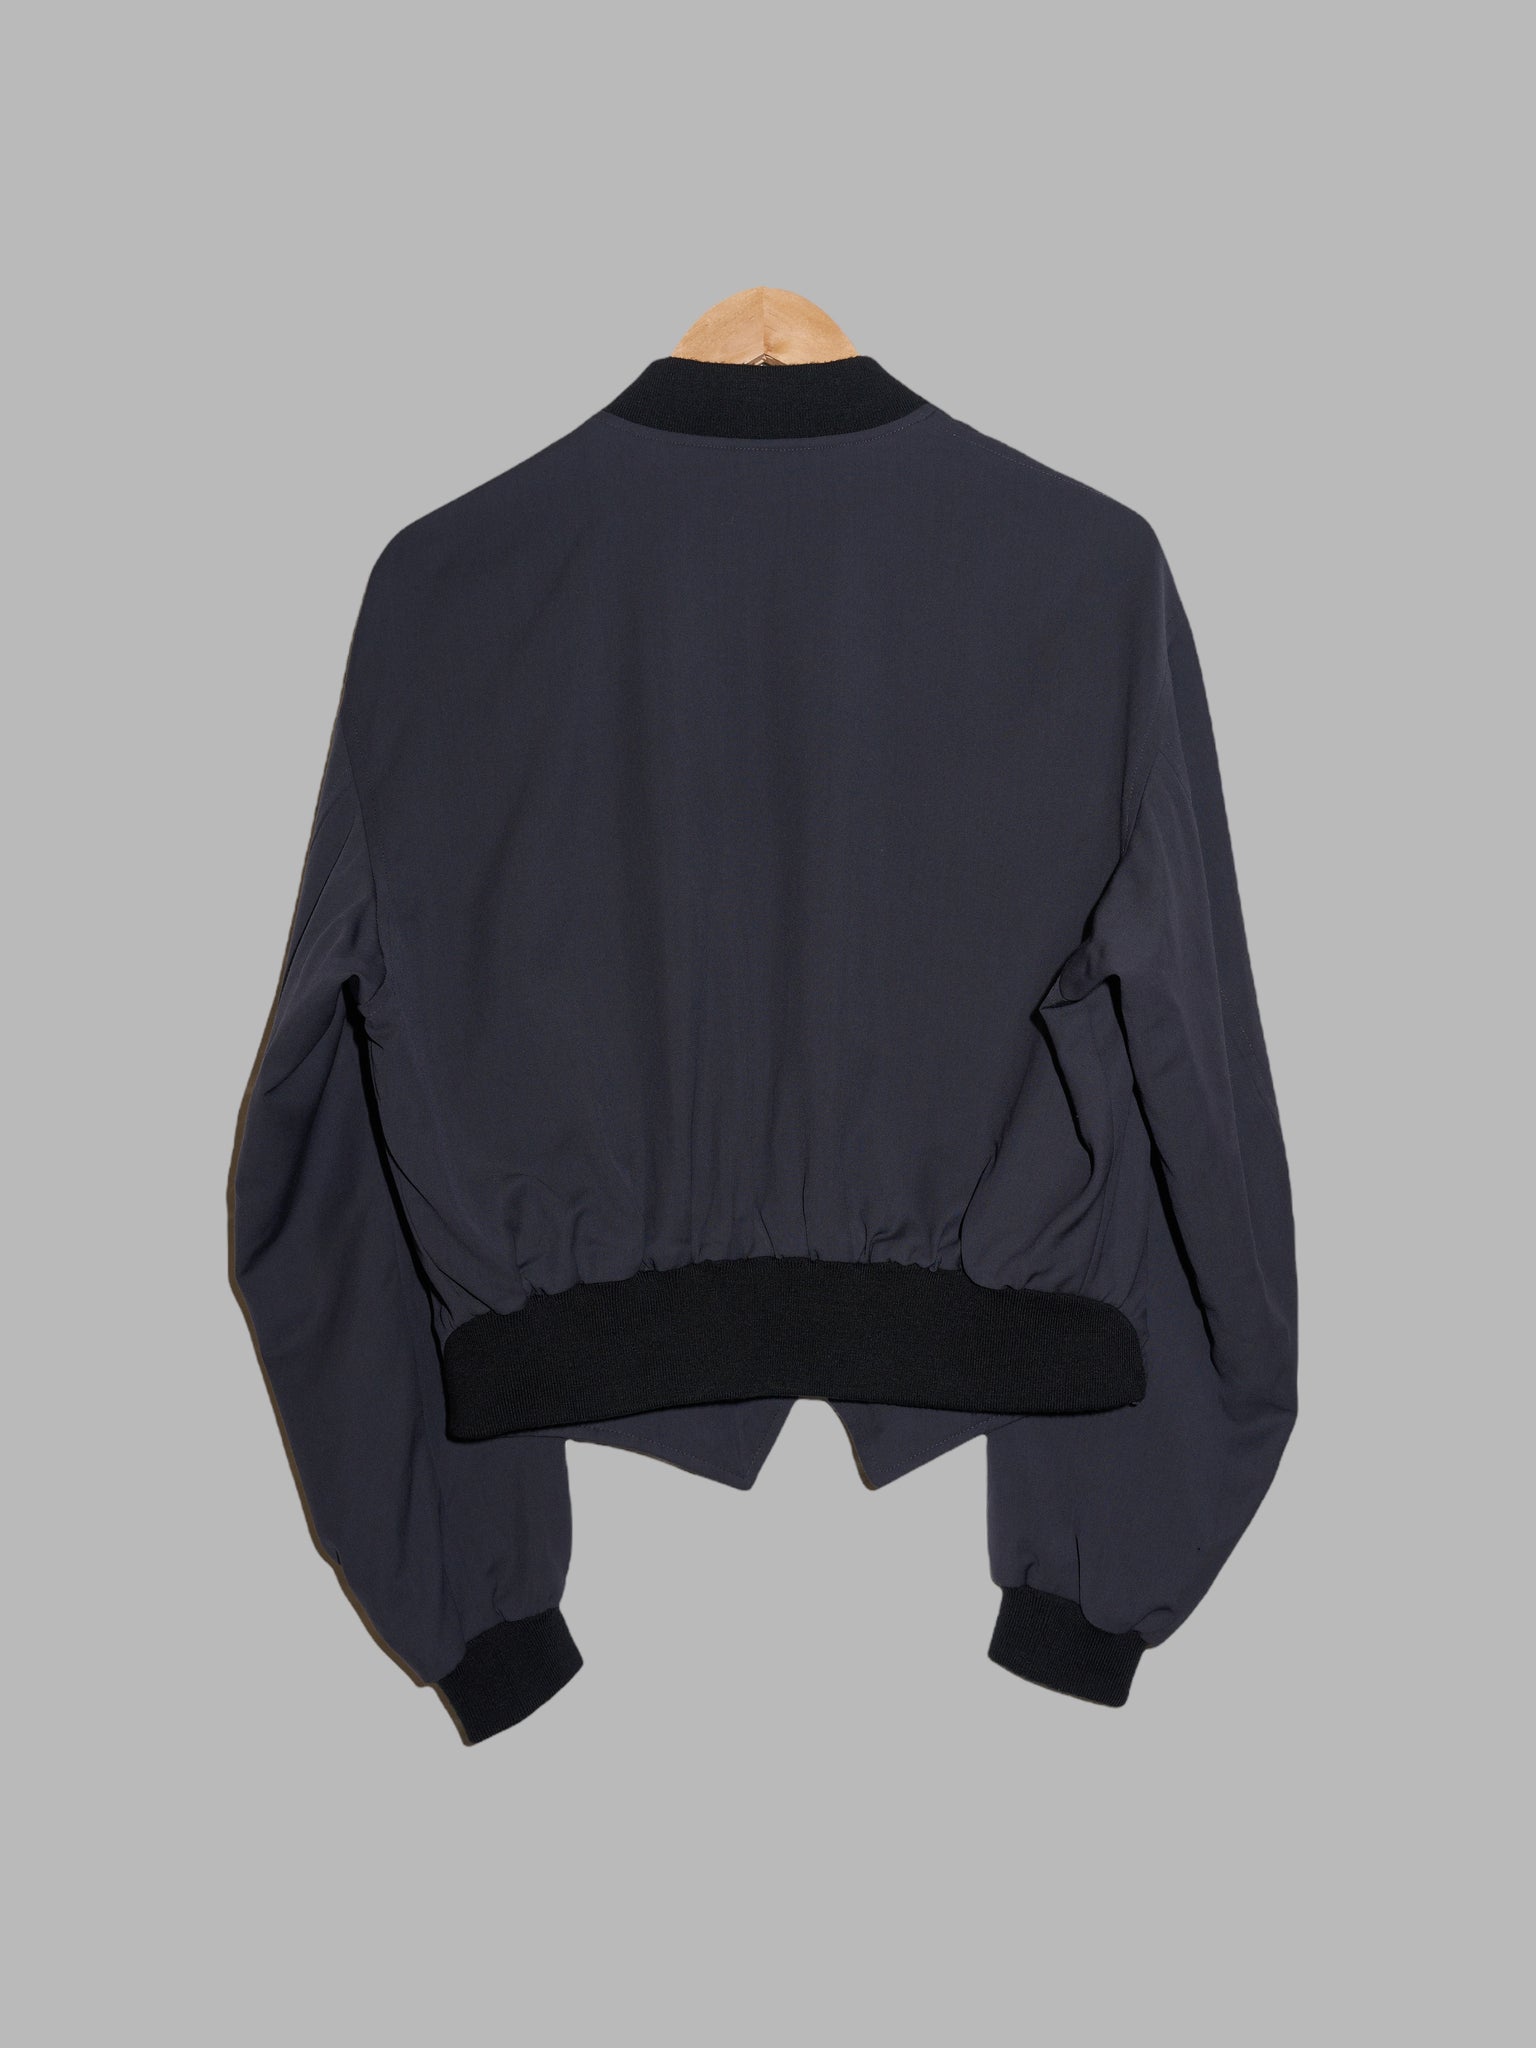 Tokio Kumagai 1980s grey wool gabardine vest-front bomber jacket